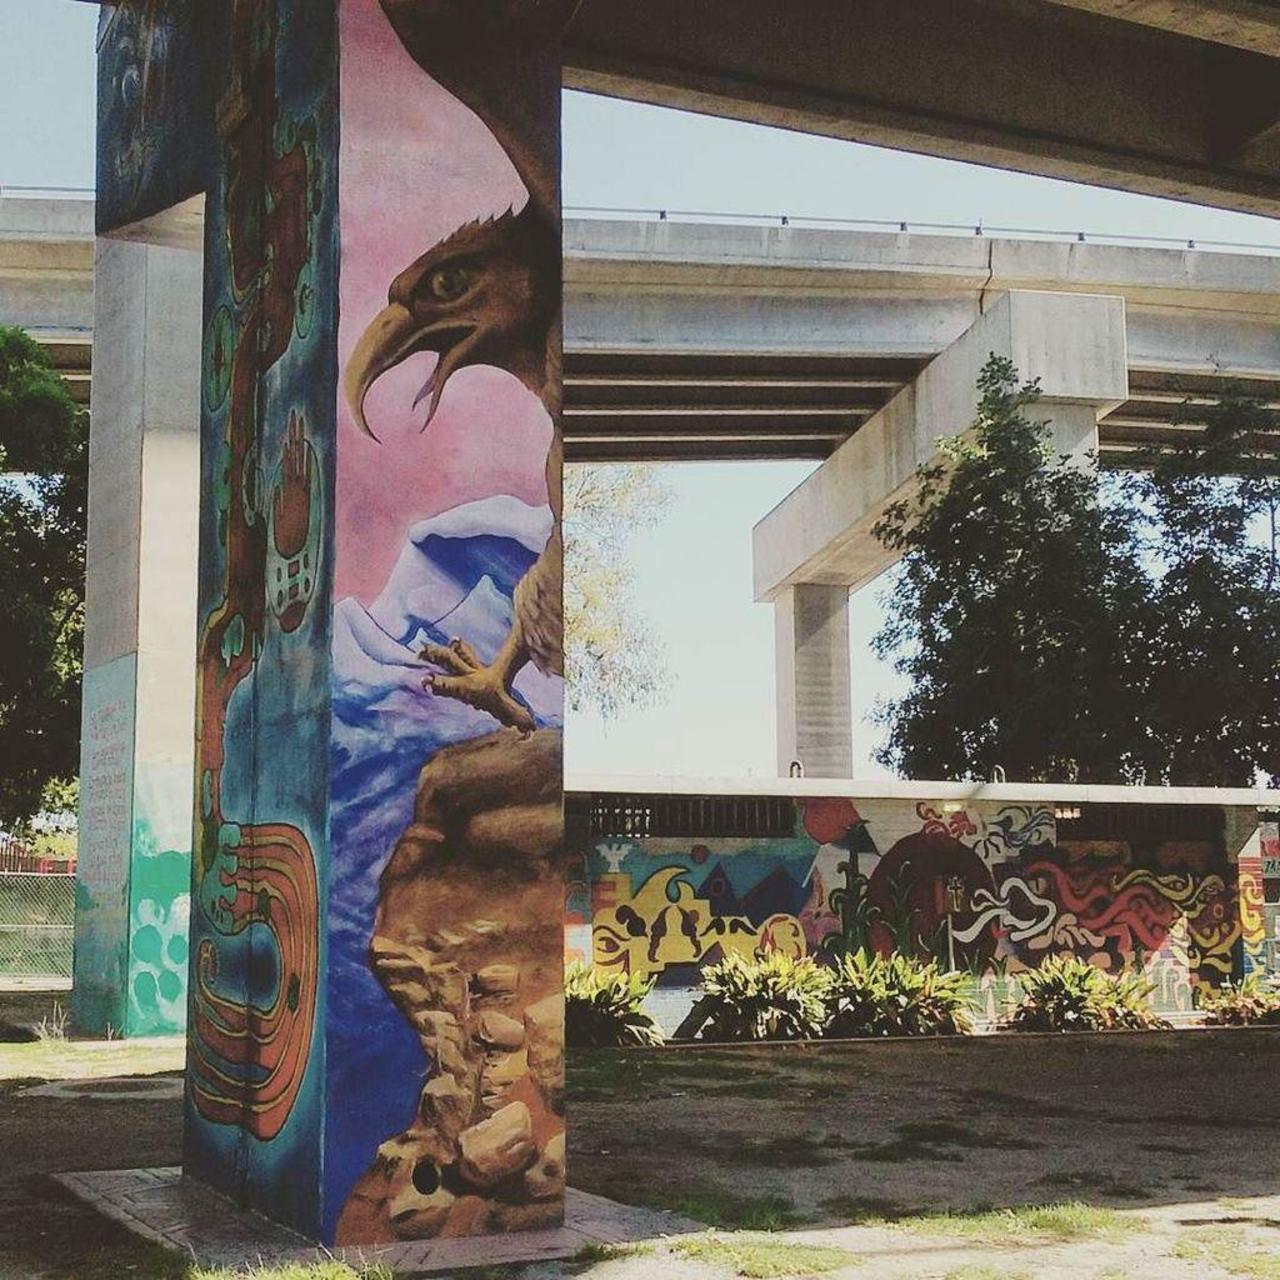 Bird under bridge 
#art #chicanopark #streetart #eagle #bird #graffiti #urbanart #heritage #creative #dope #mural #… http://t.co/K0wM71JtEf